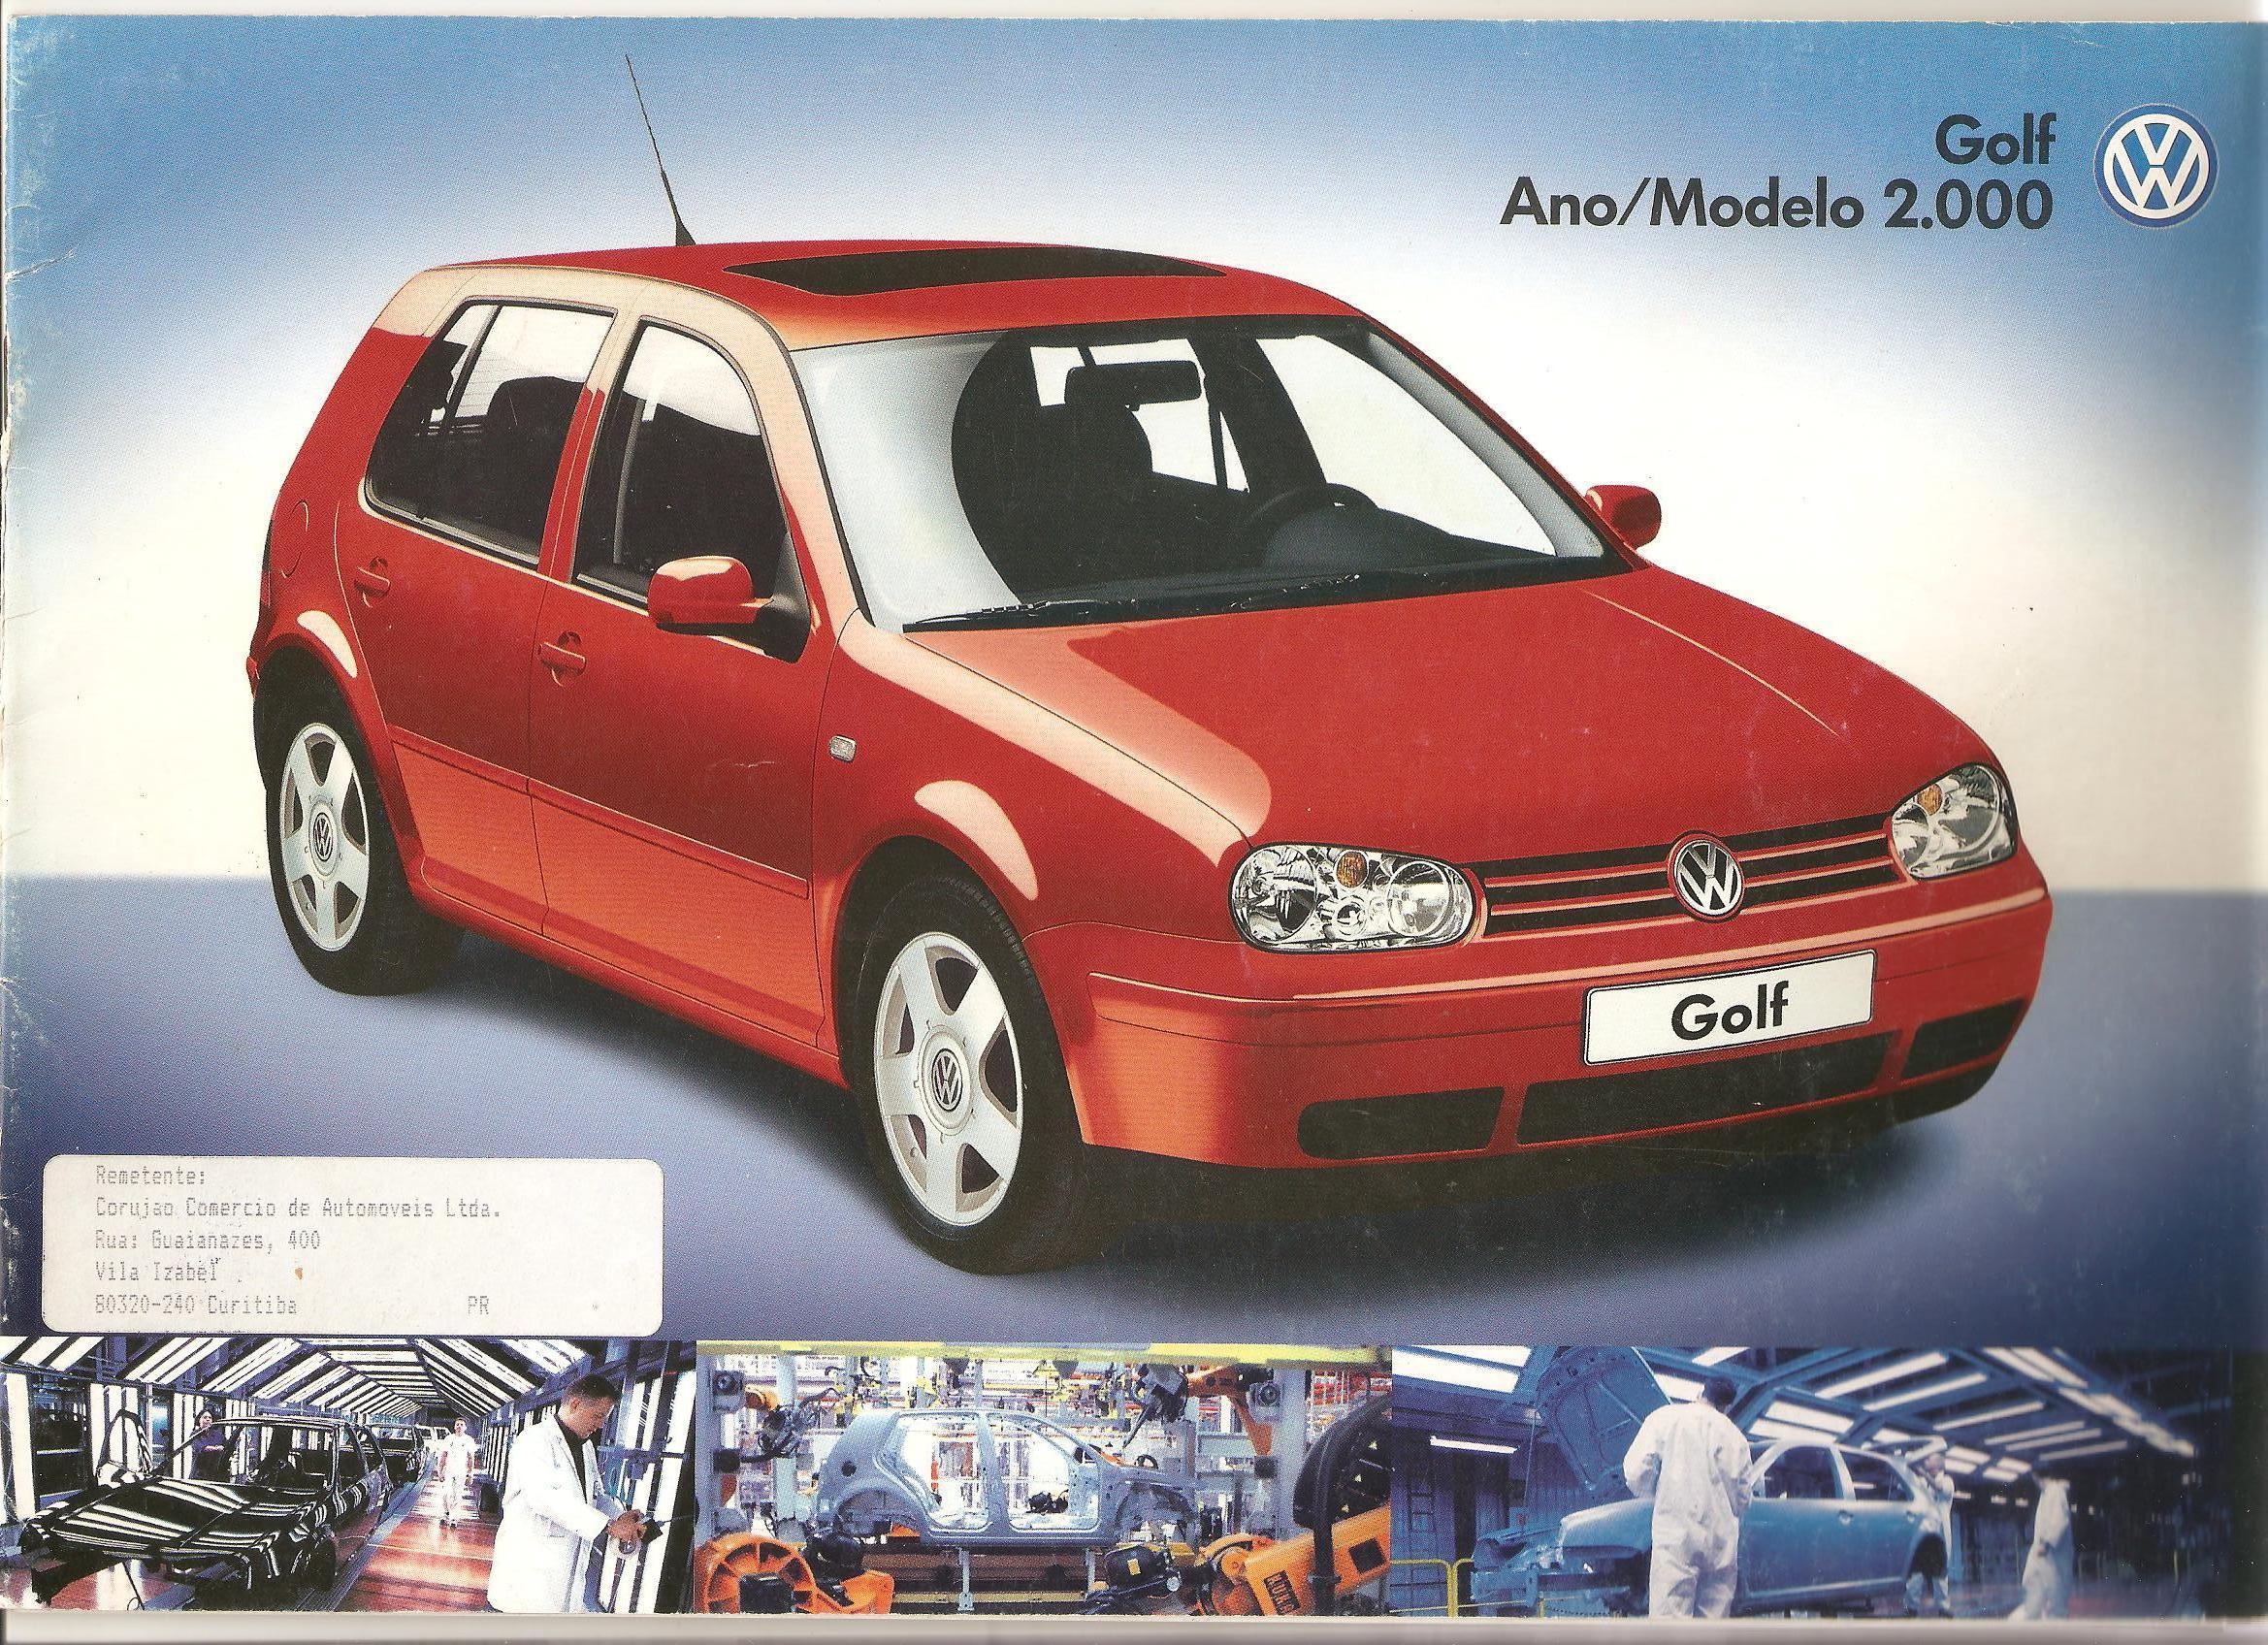  :: VW Archives - 2000 VW Golf Sales Brochure - Brazil